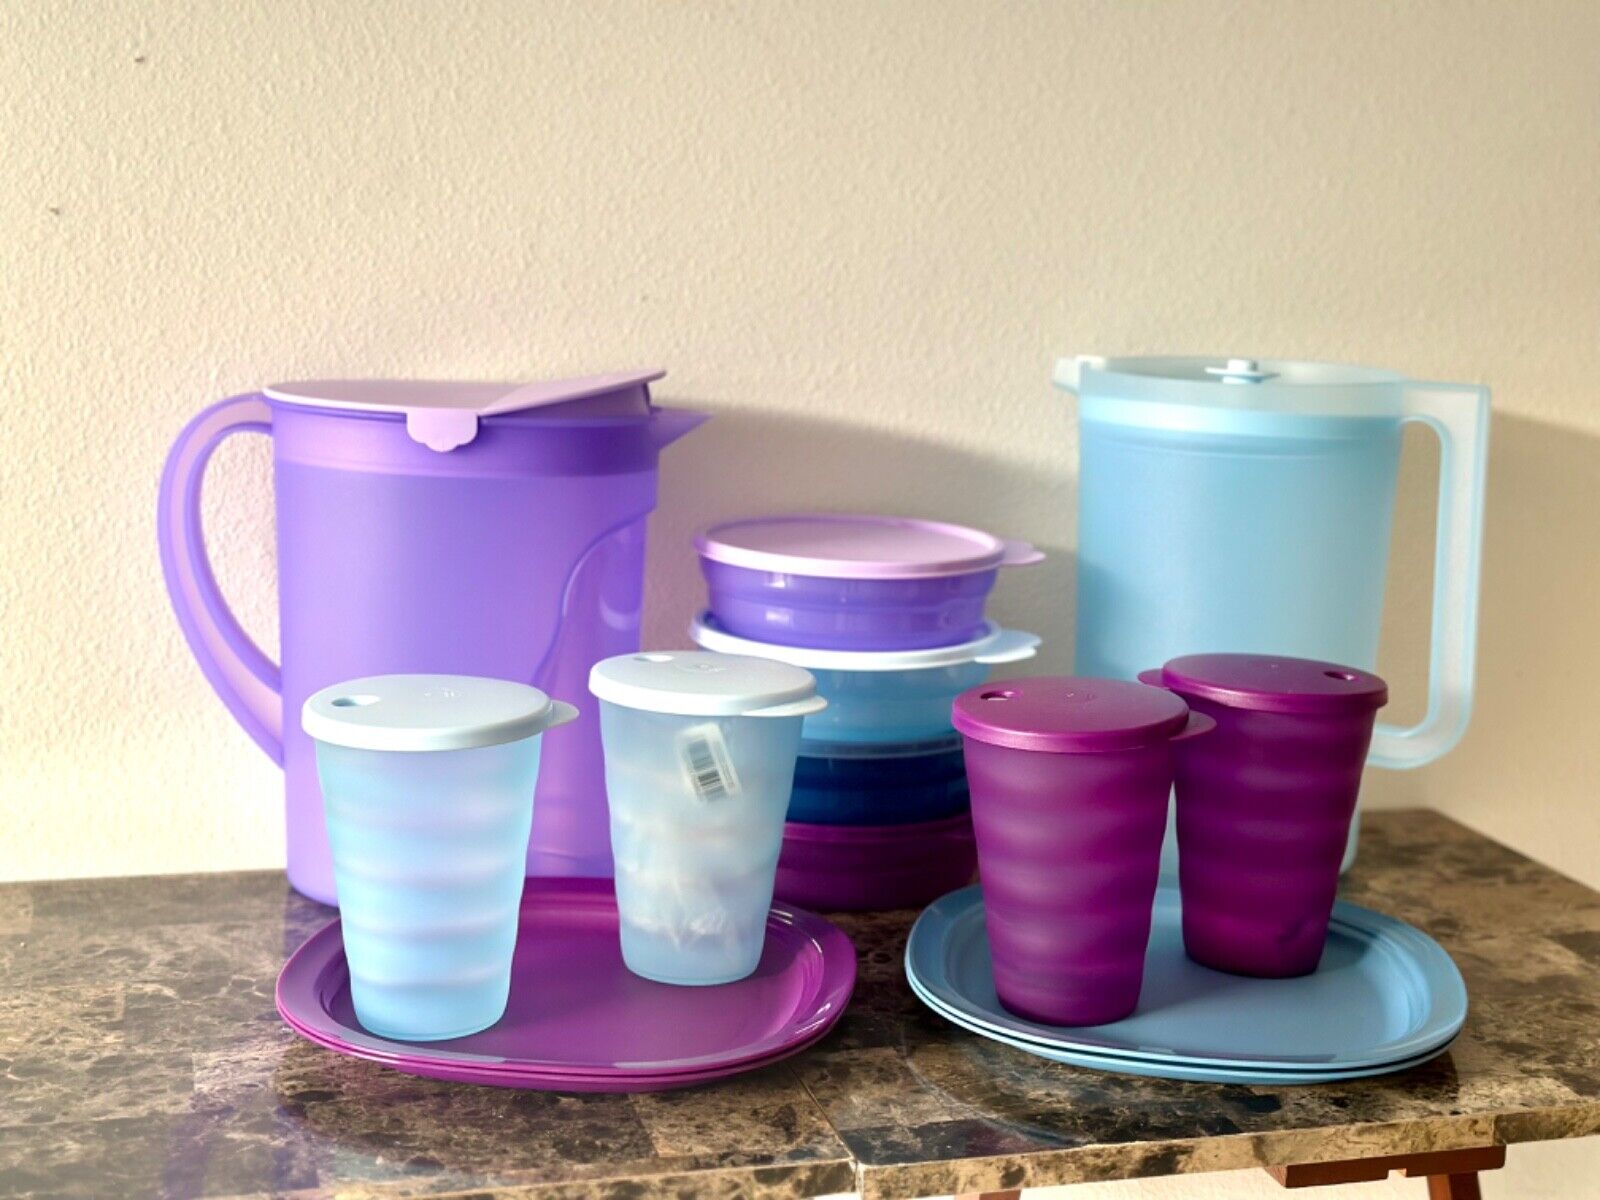 New 🆕 Tupperware Impressions Purple/Blue Serving 14 pc Set Pitchers/Cups/Plates